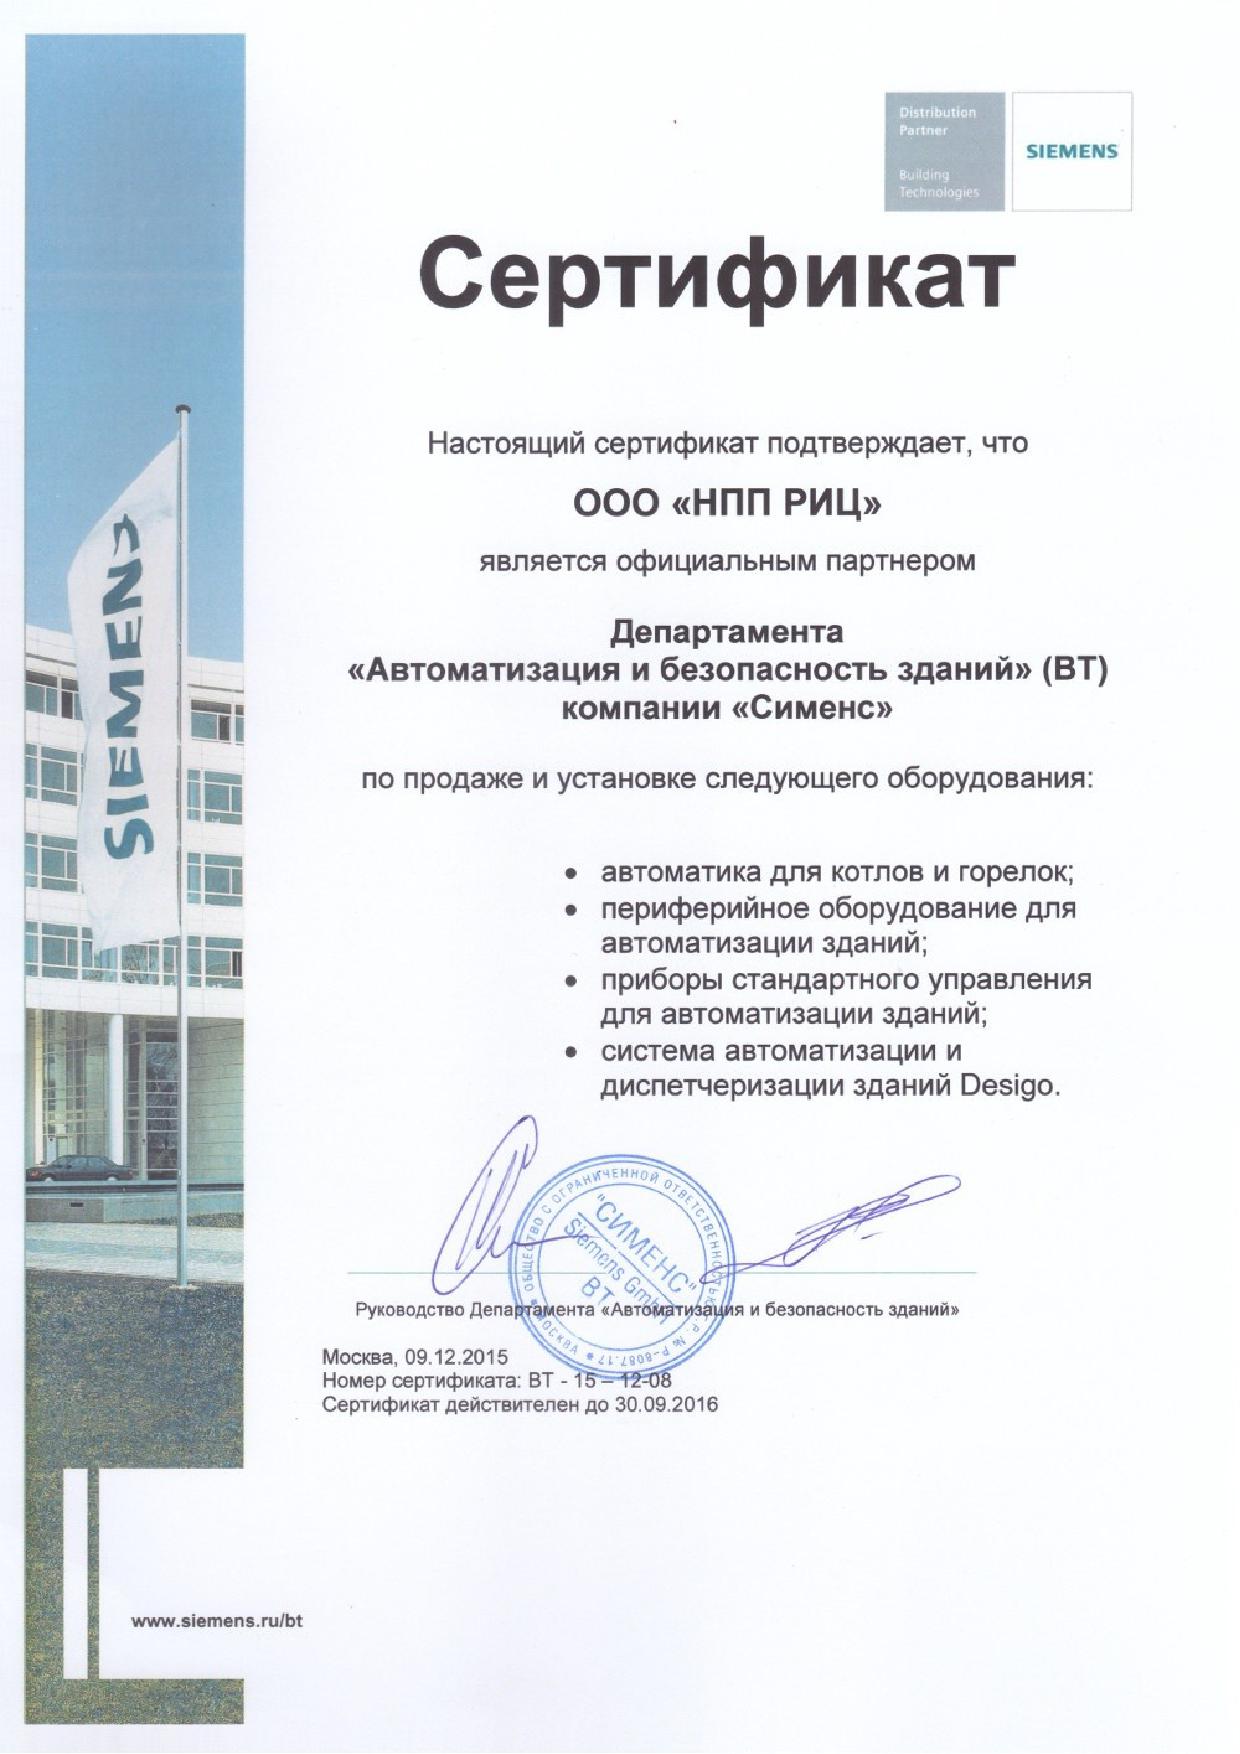 2015-12-09-2016-09-30-certificate-SIEMENS